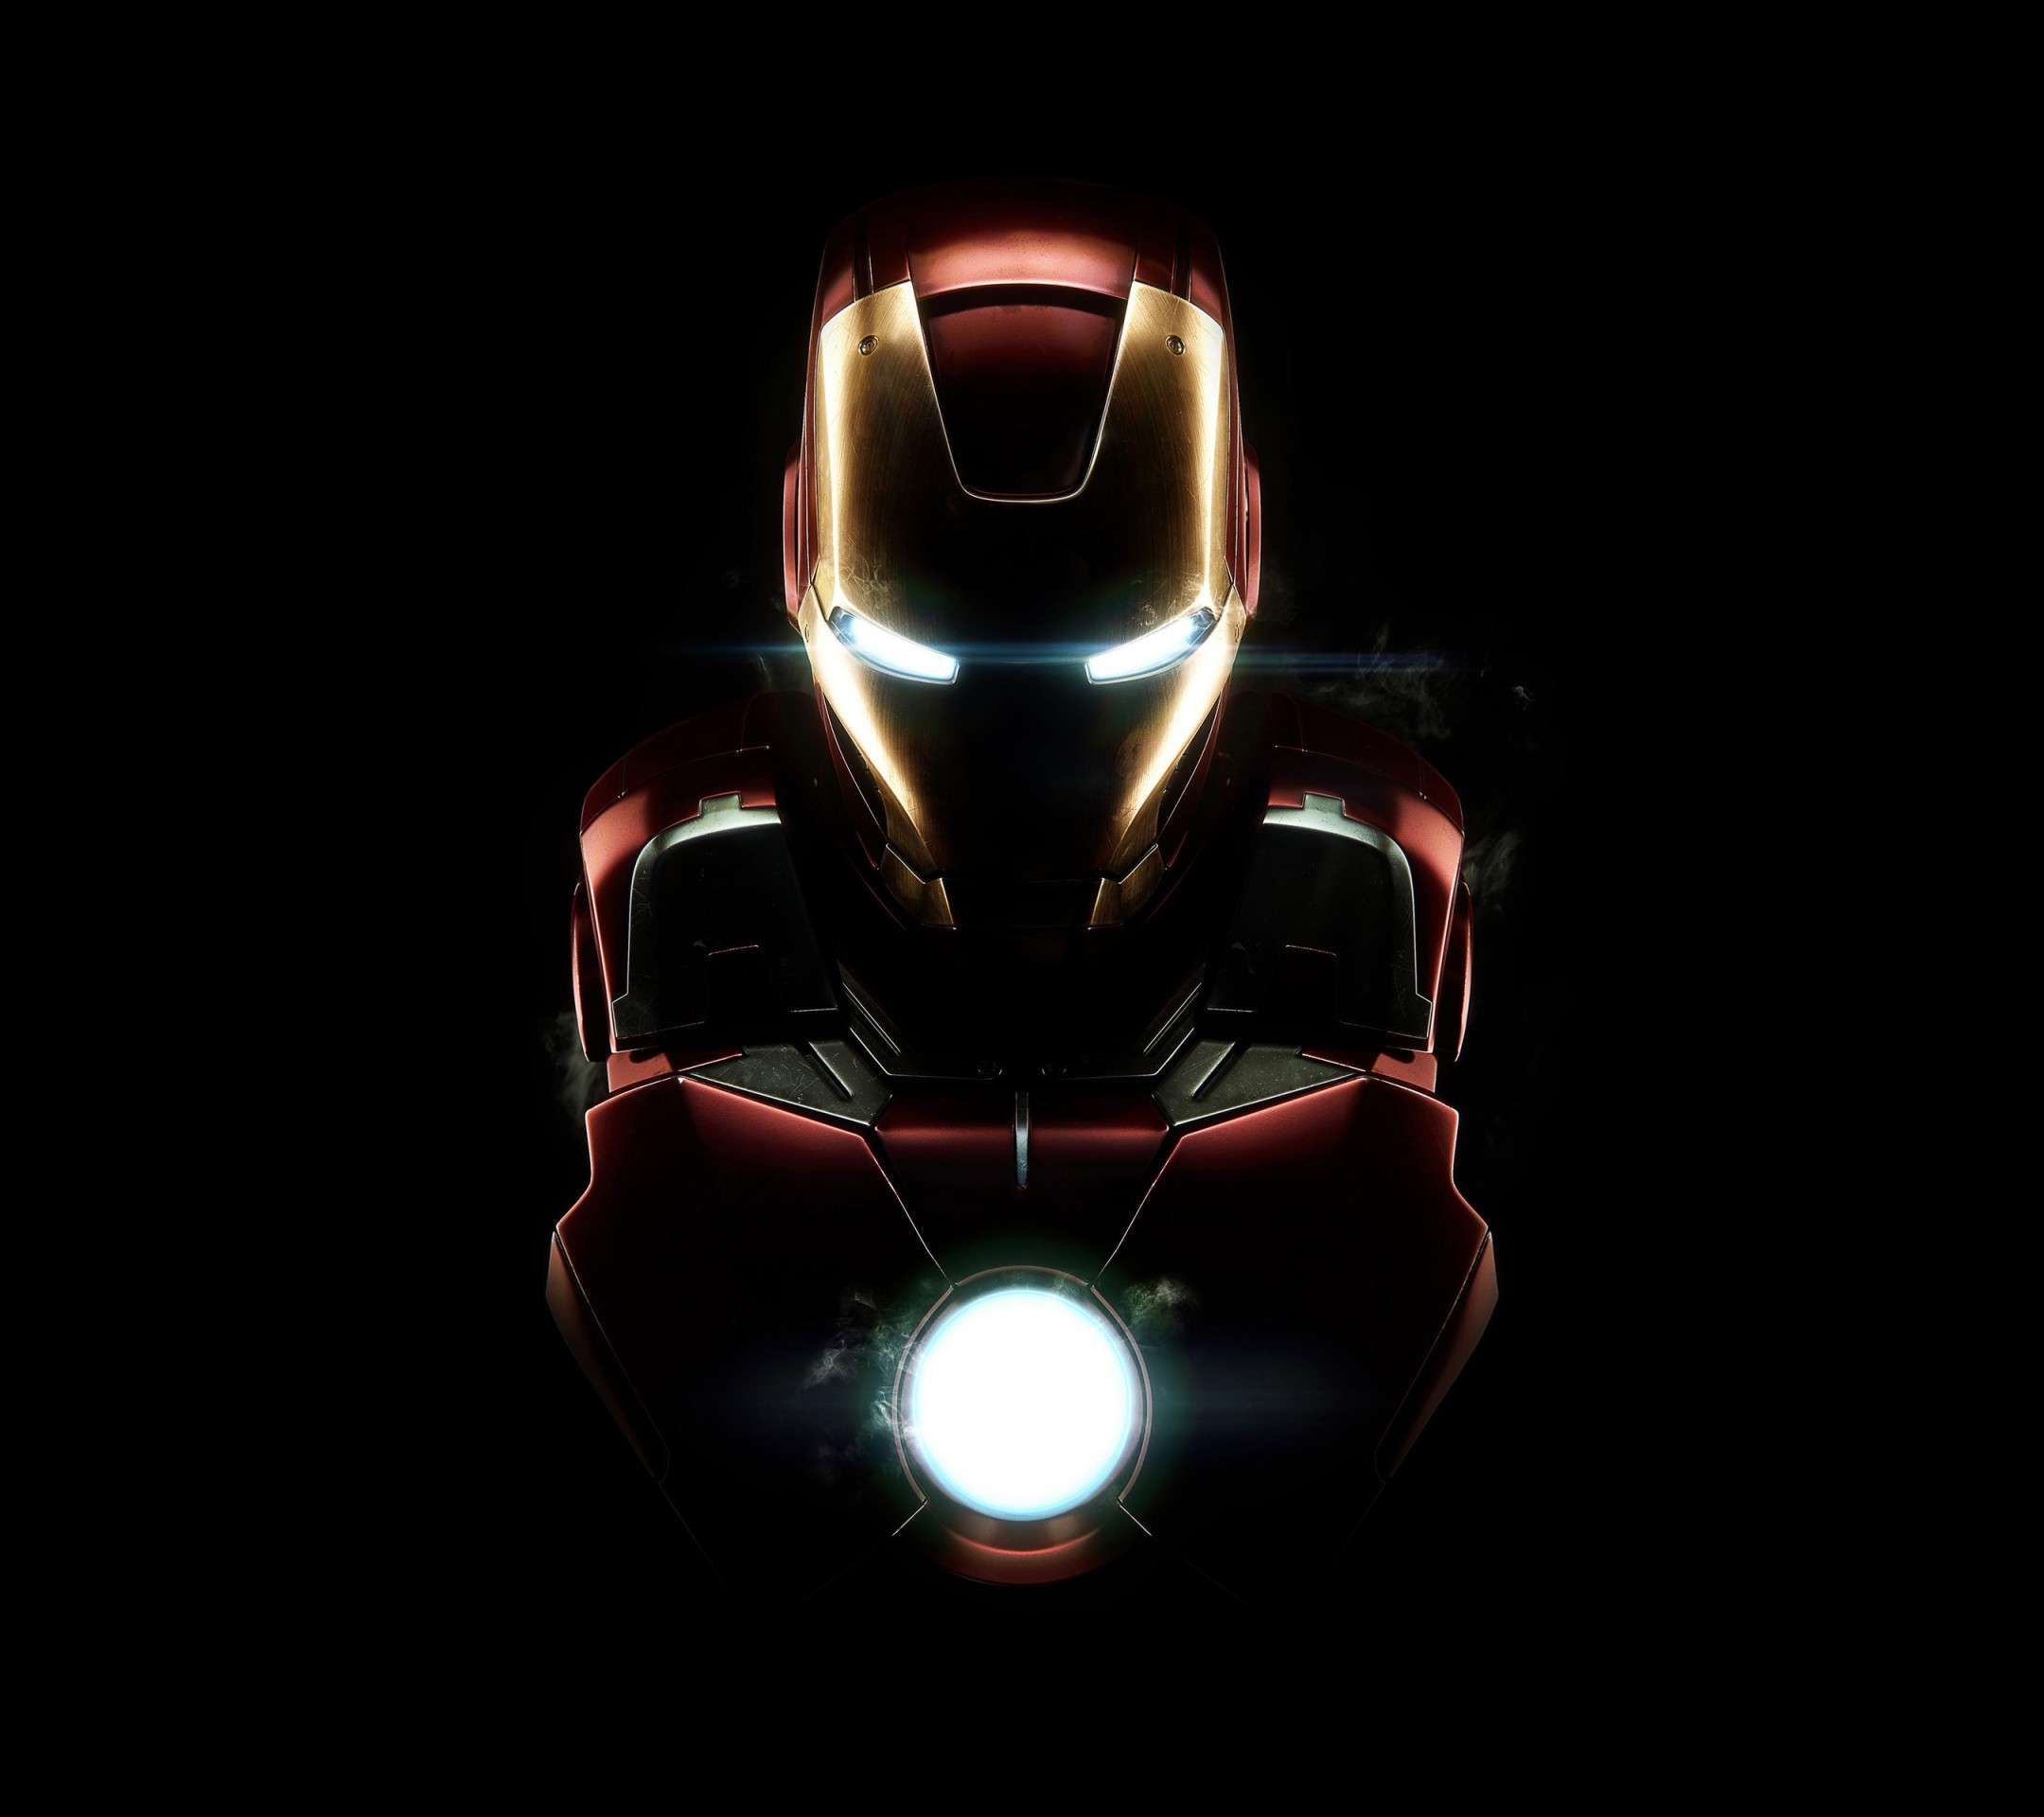 Iron Man, Nano Suit - Ironman Hd Avenger Wallpaper Android - 1280x1024  Wallpaper 